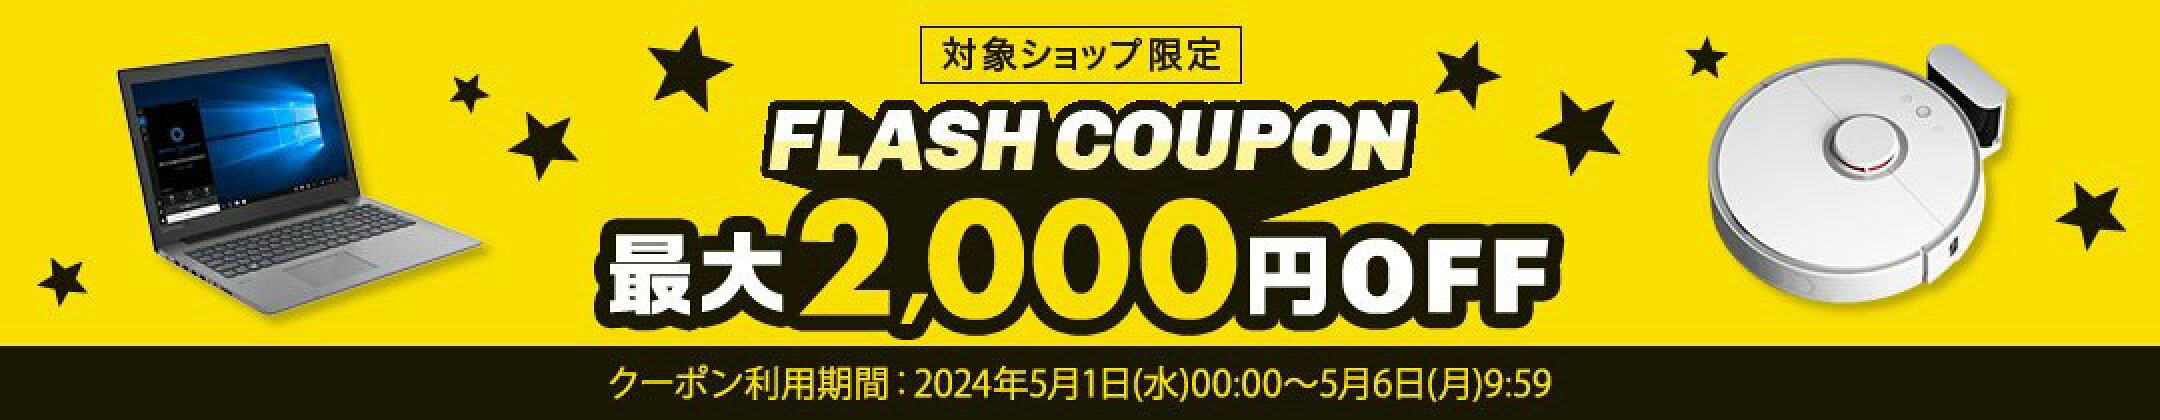 flash coupon